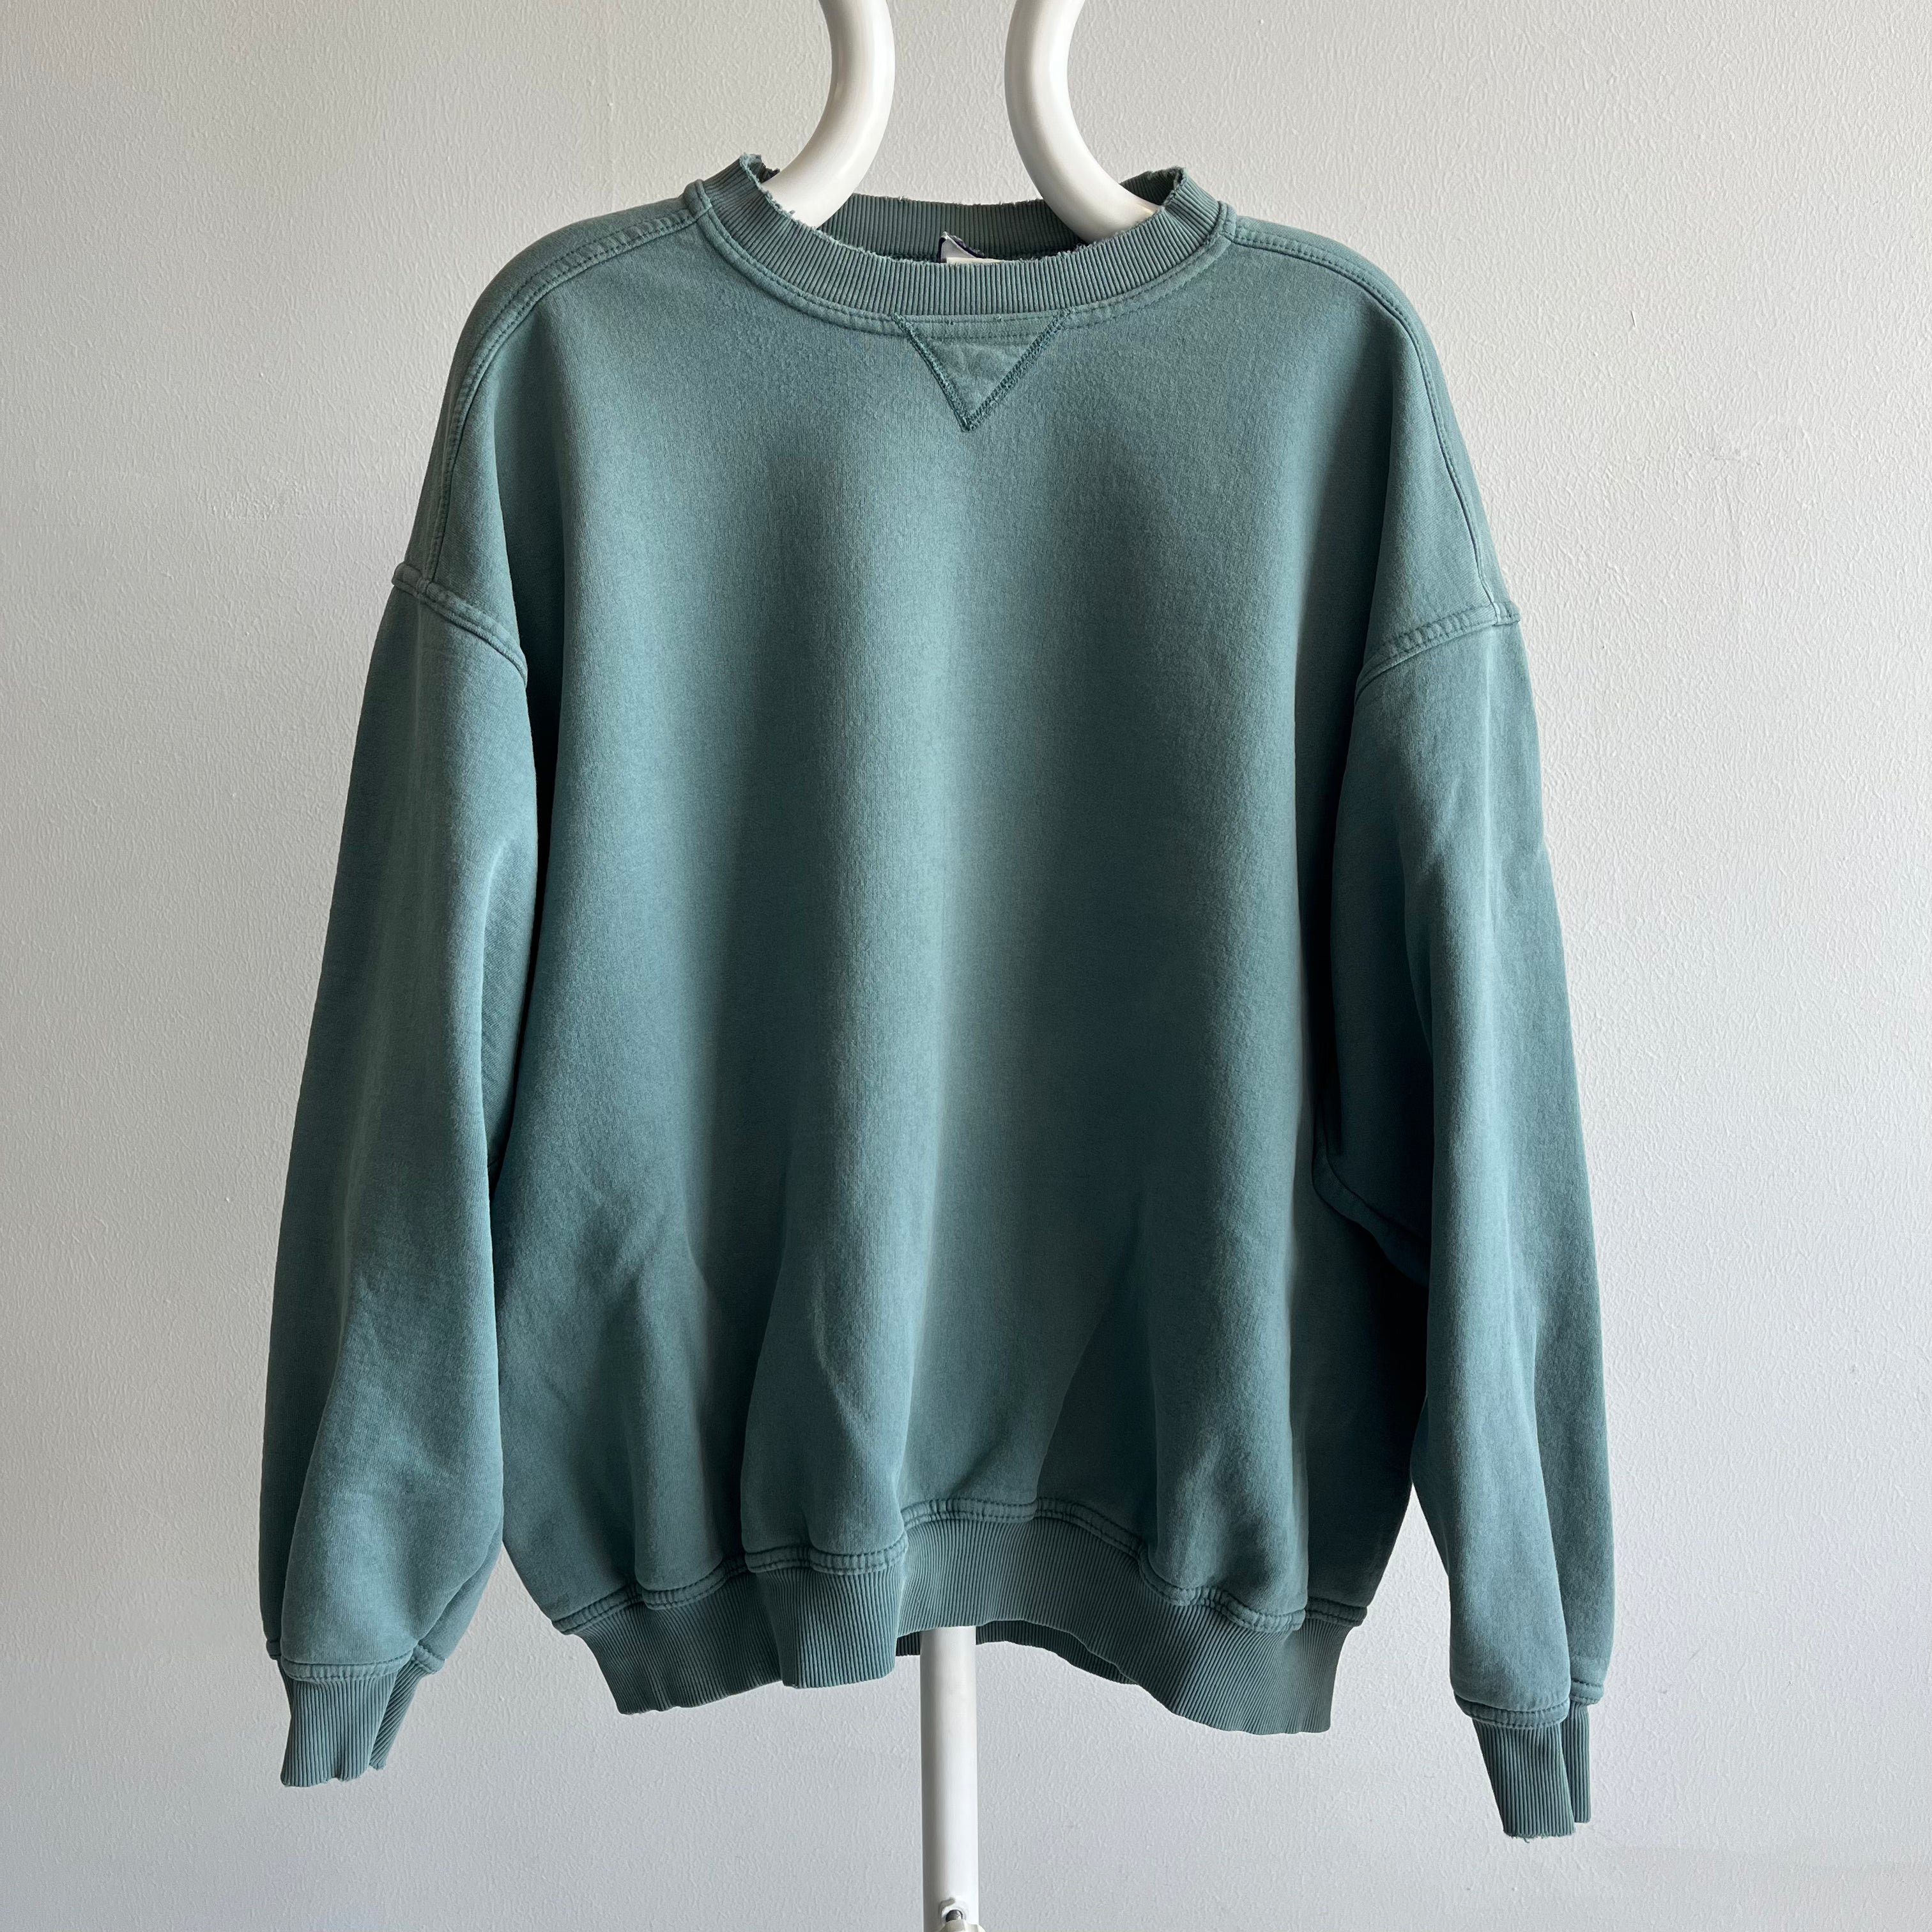 1990/2000s Jade Green Nicely Tattered Collar Sweatshirt